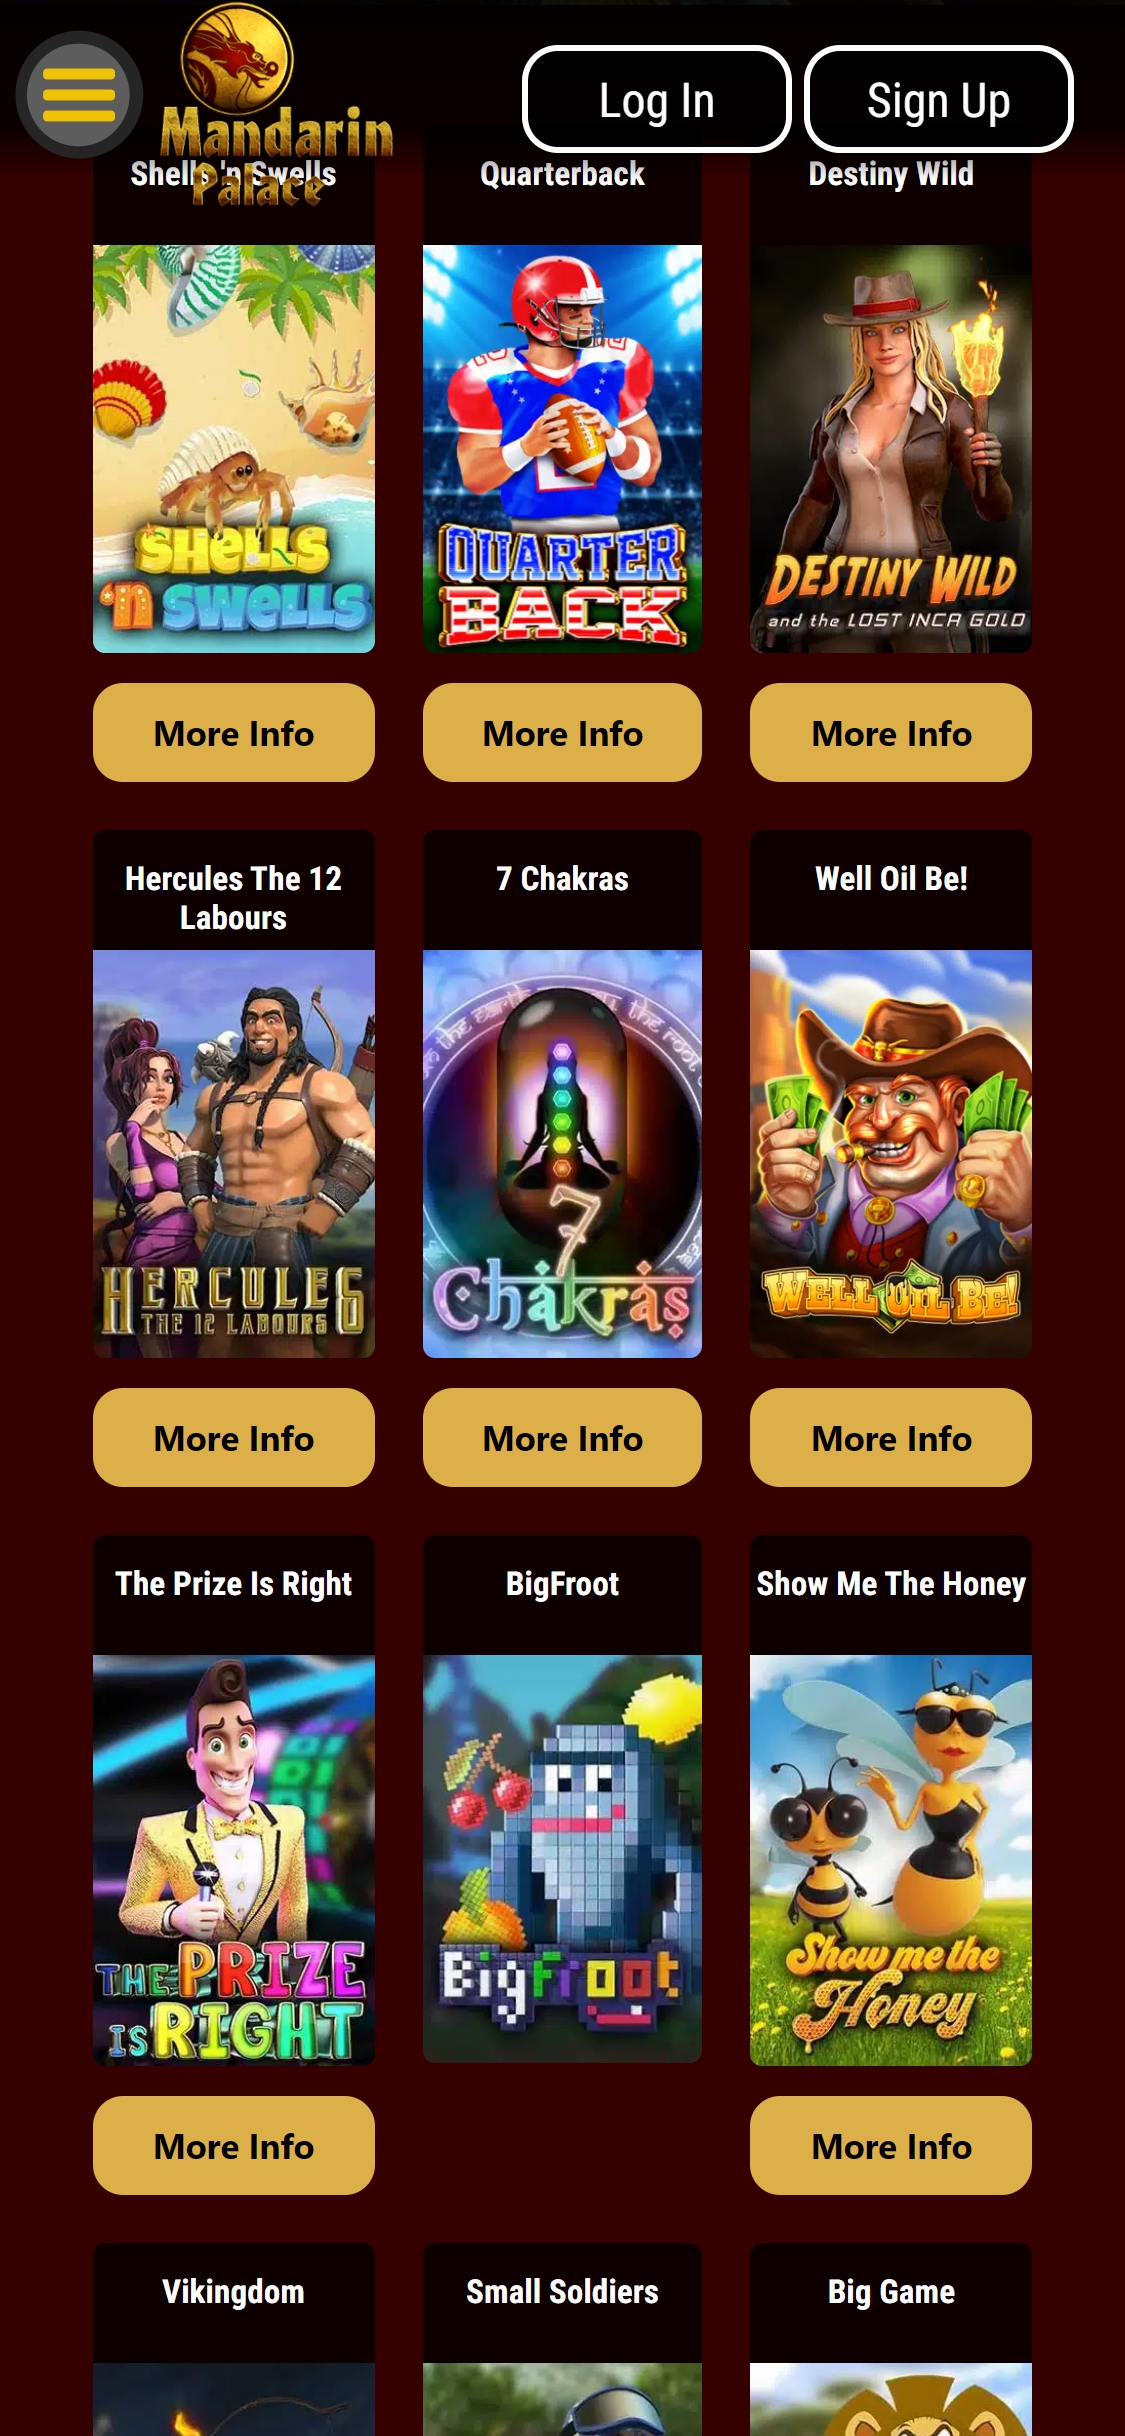 Mandarin Palace Casino Mobile Games Review